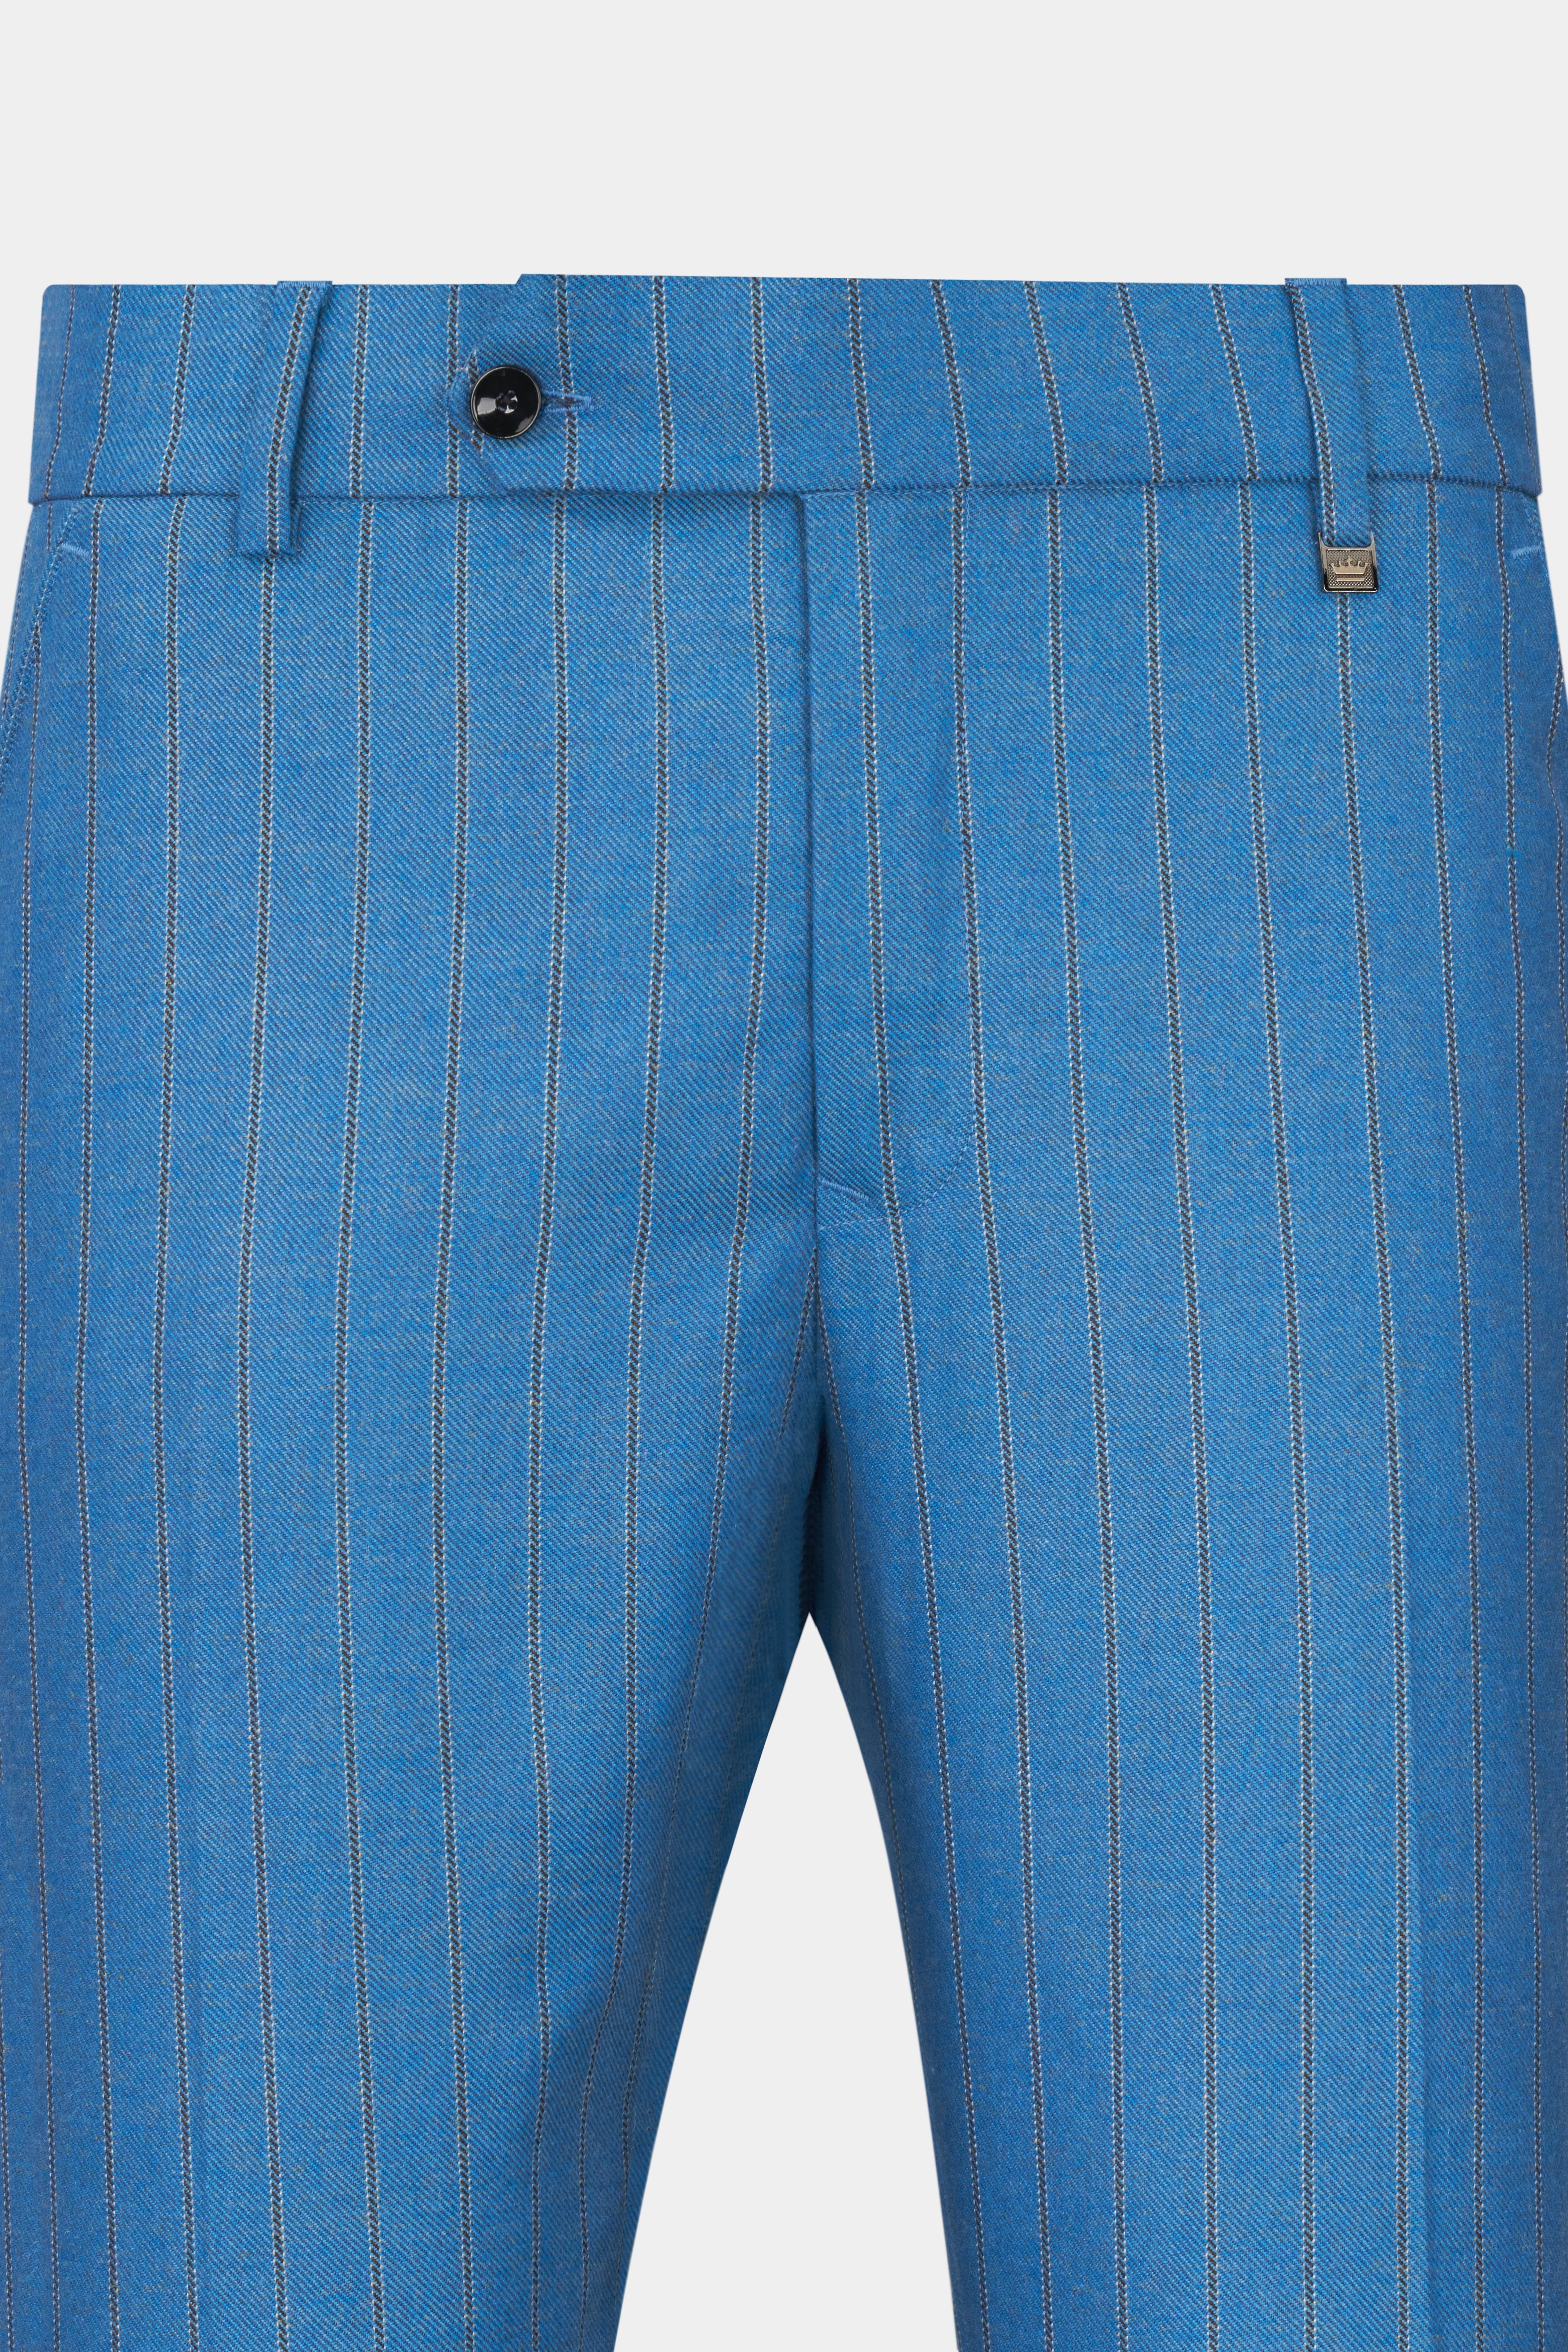 Wedgewood Blue Subtle Striped Tweed Pant T2766-28, T2766-30, T2766-32, T2766-34, T2766-36, T2766-38, T2766-40, T2766-42, T2766-44